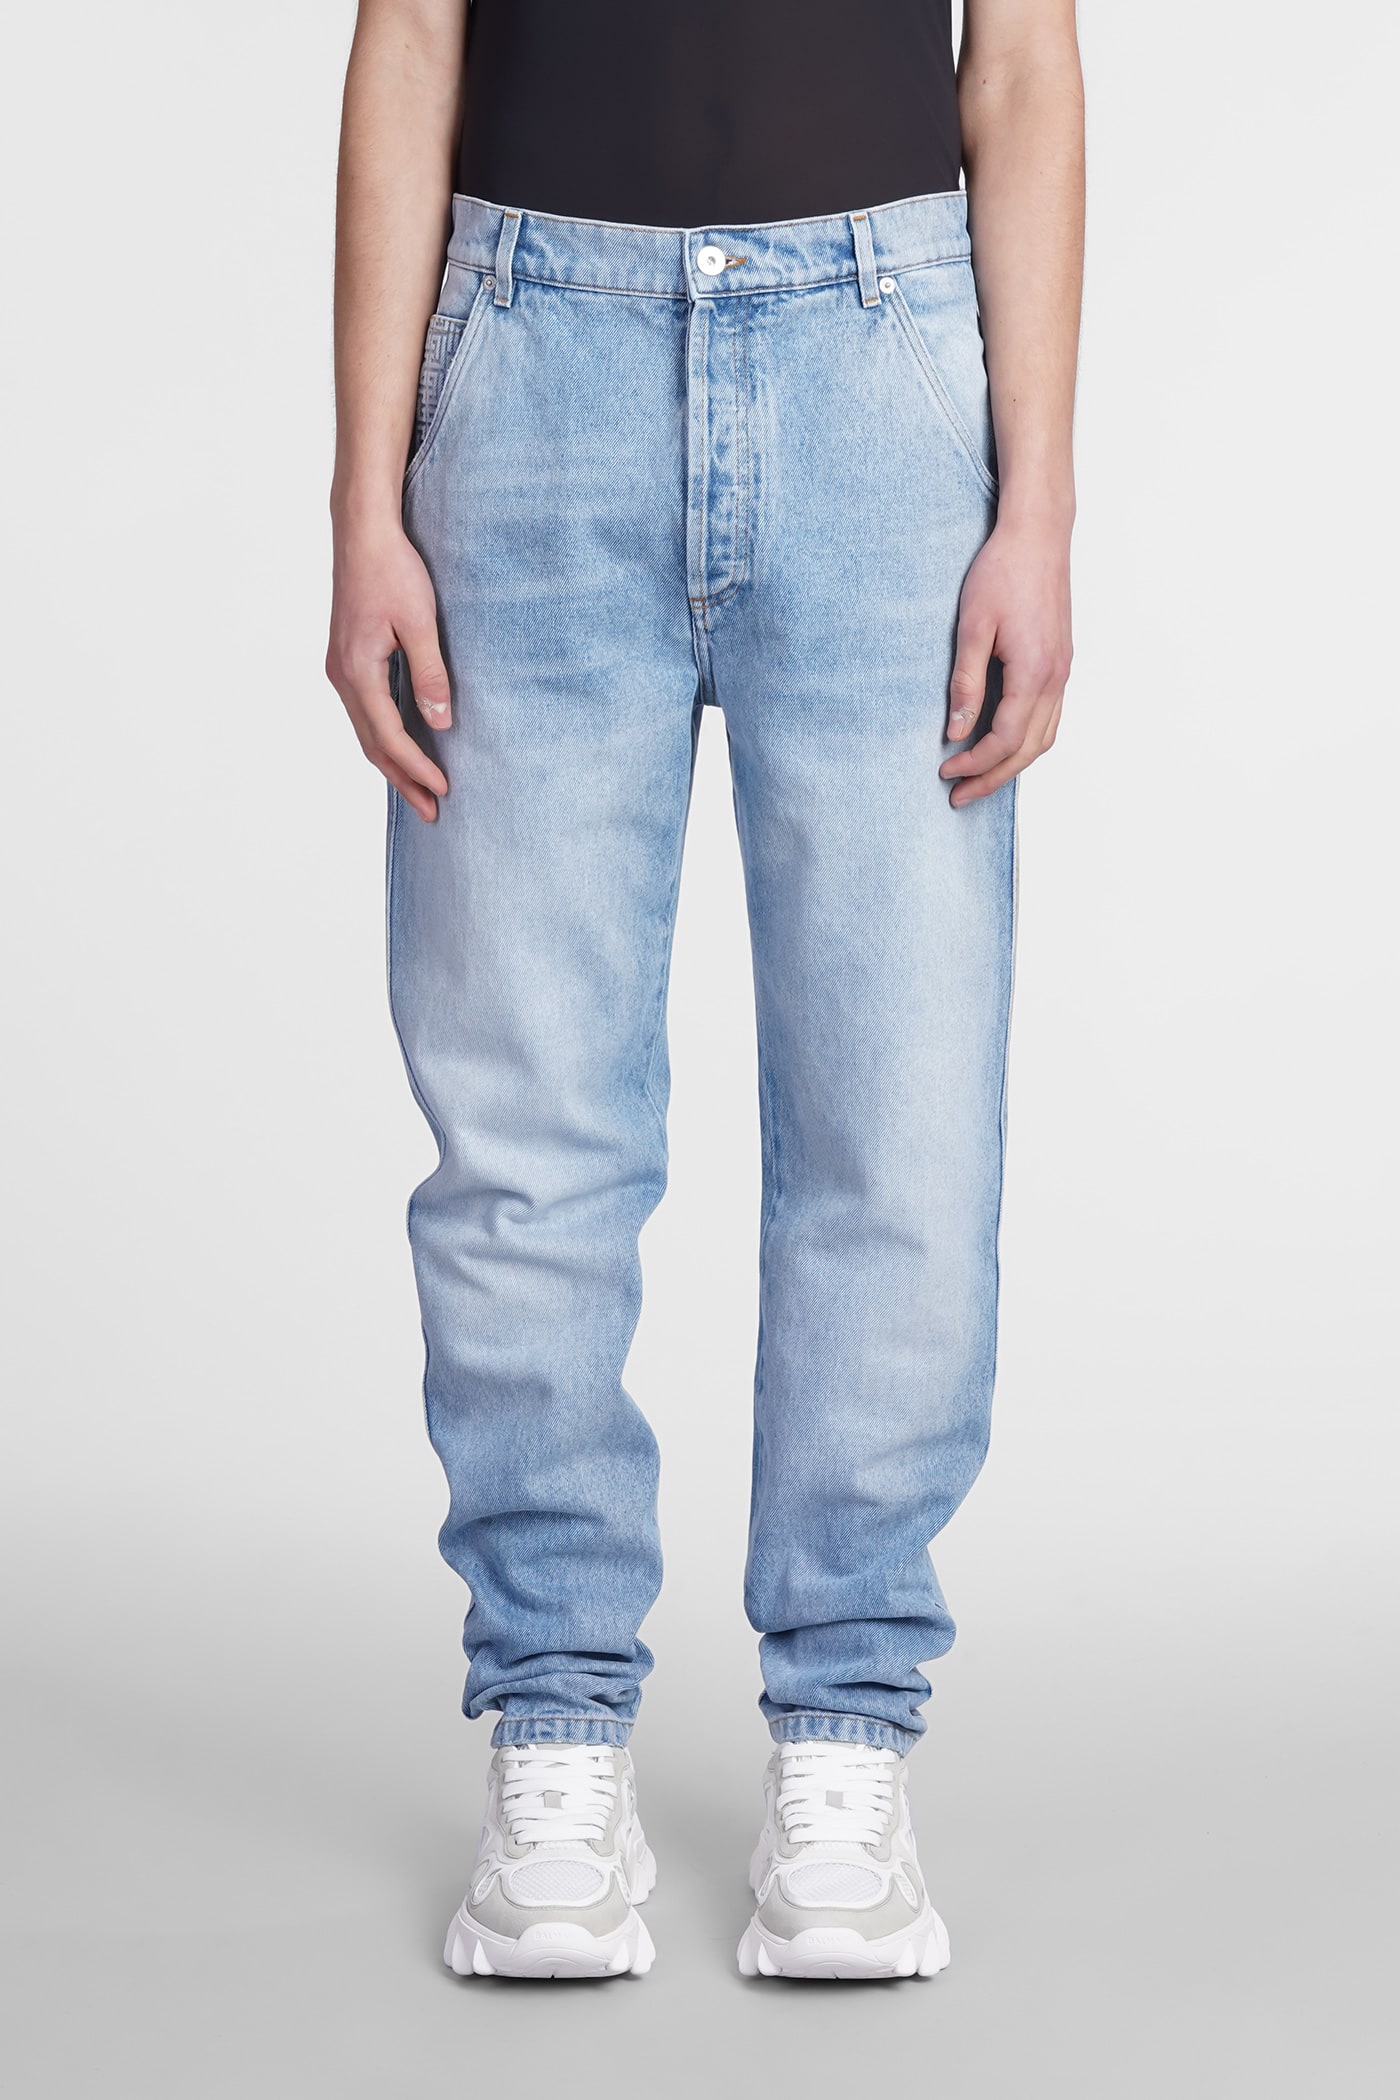 Balmain Jeans In Cyan Denim